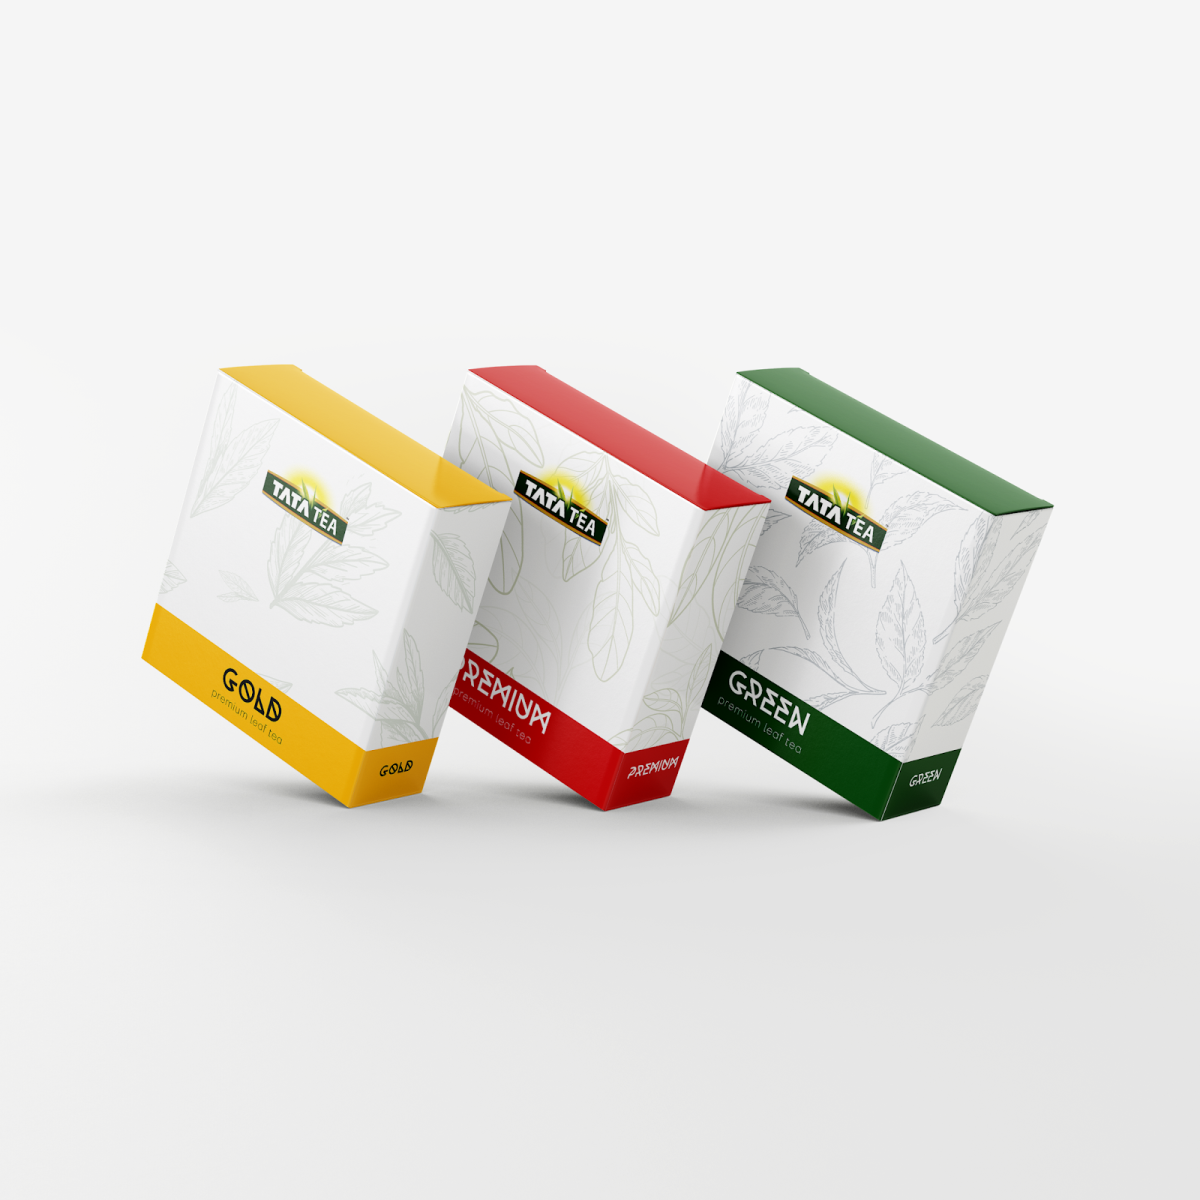 Tata Tea Concept Packaging for Scandinavia